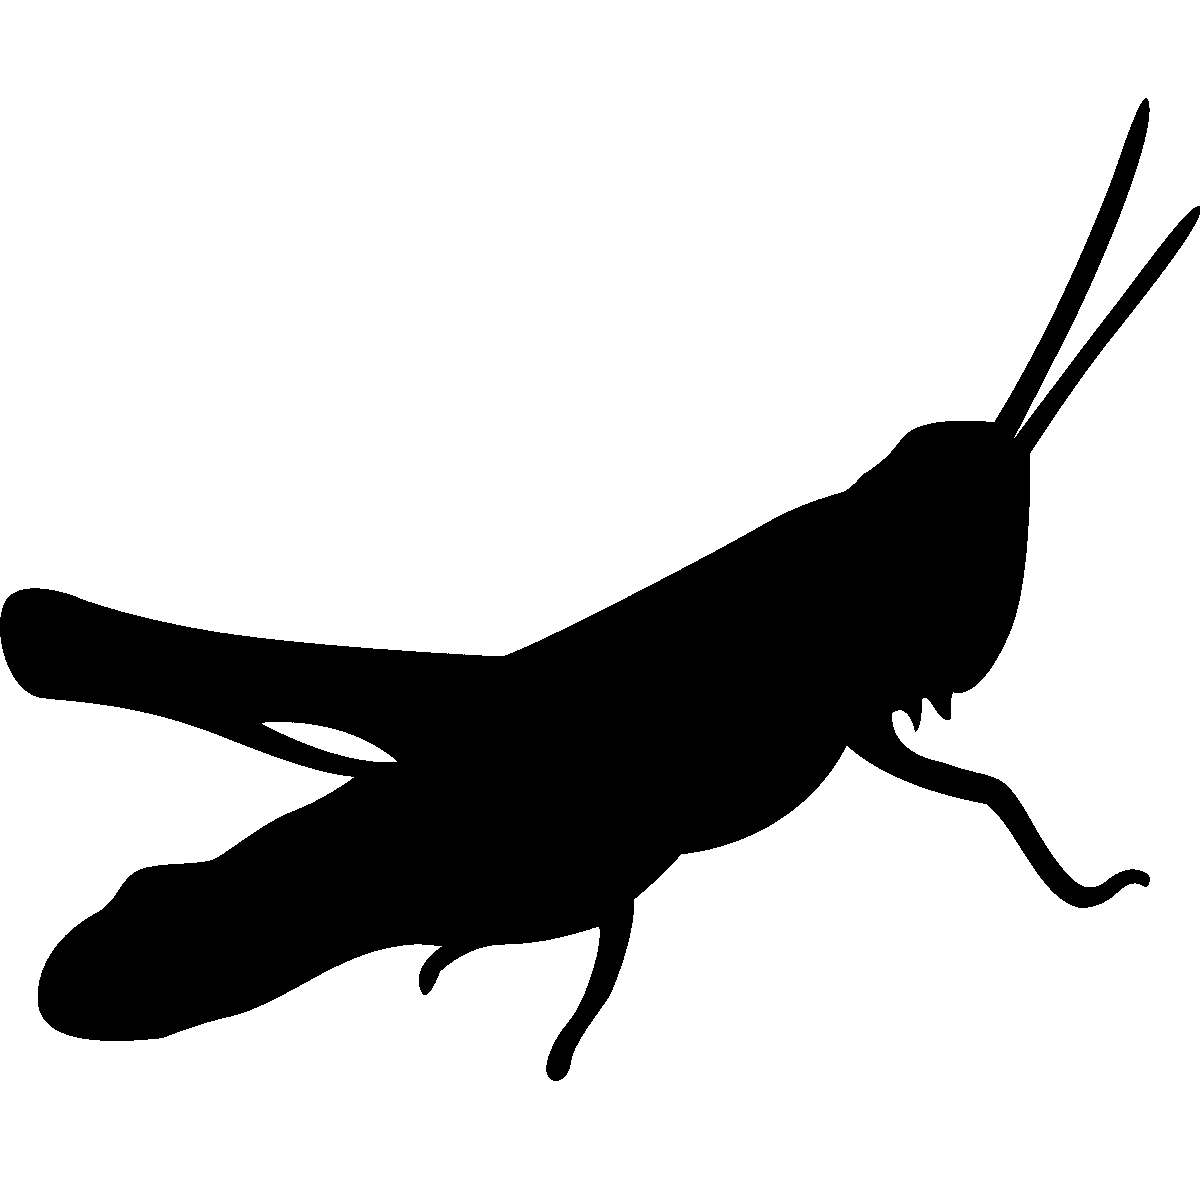 grasshopper clipart silhouette